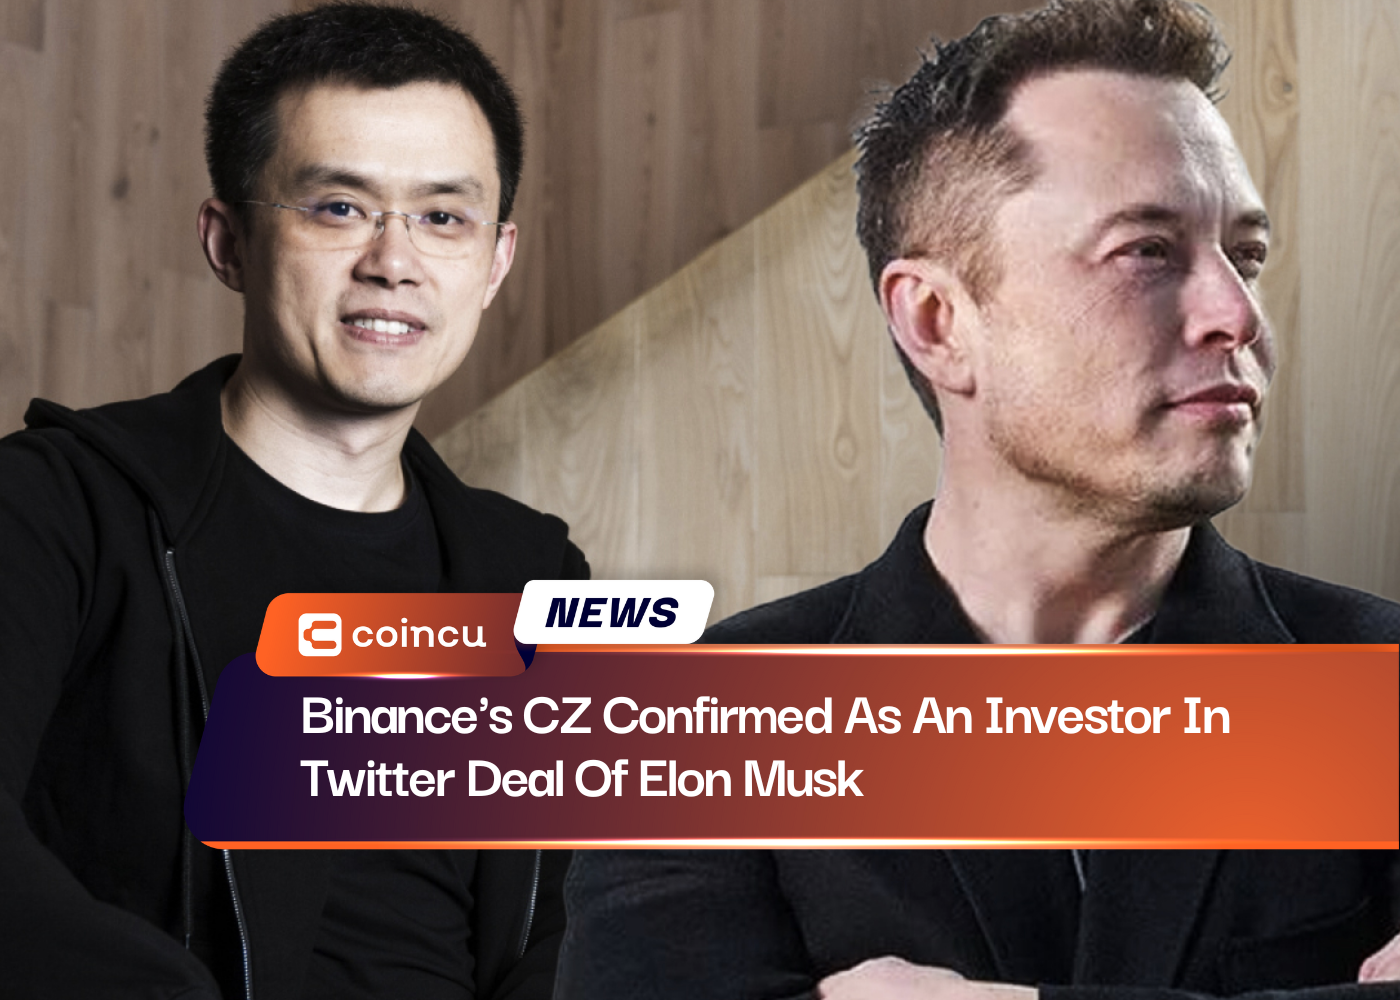 Binance's CZ Confirmed As An Investor In Twitter Deal Of Elon Musk